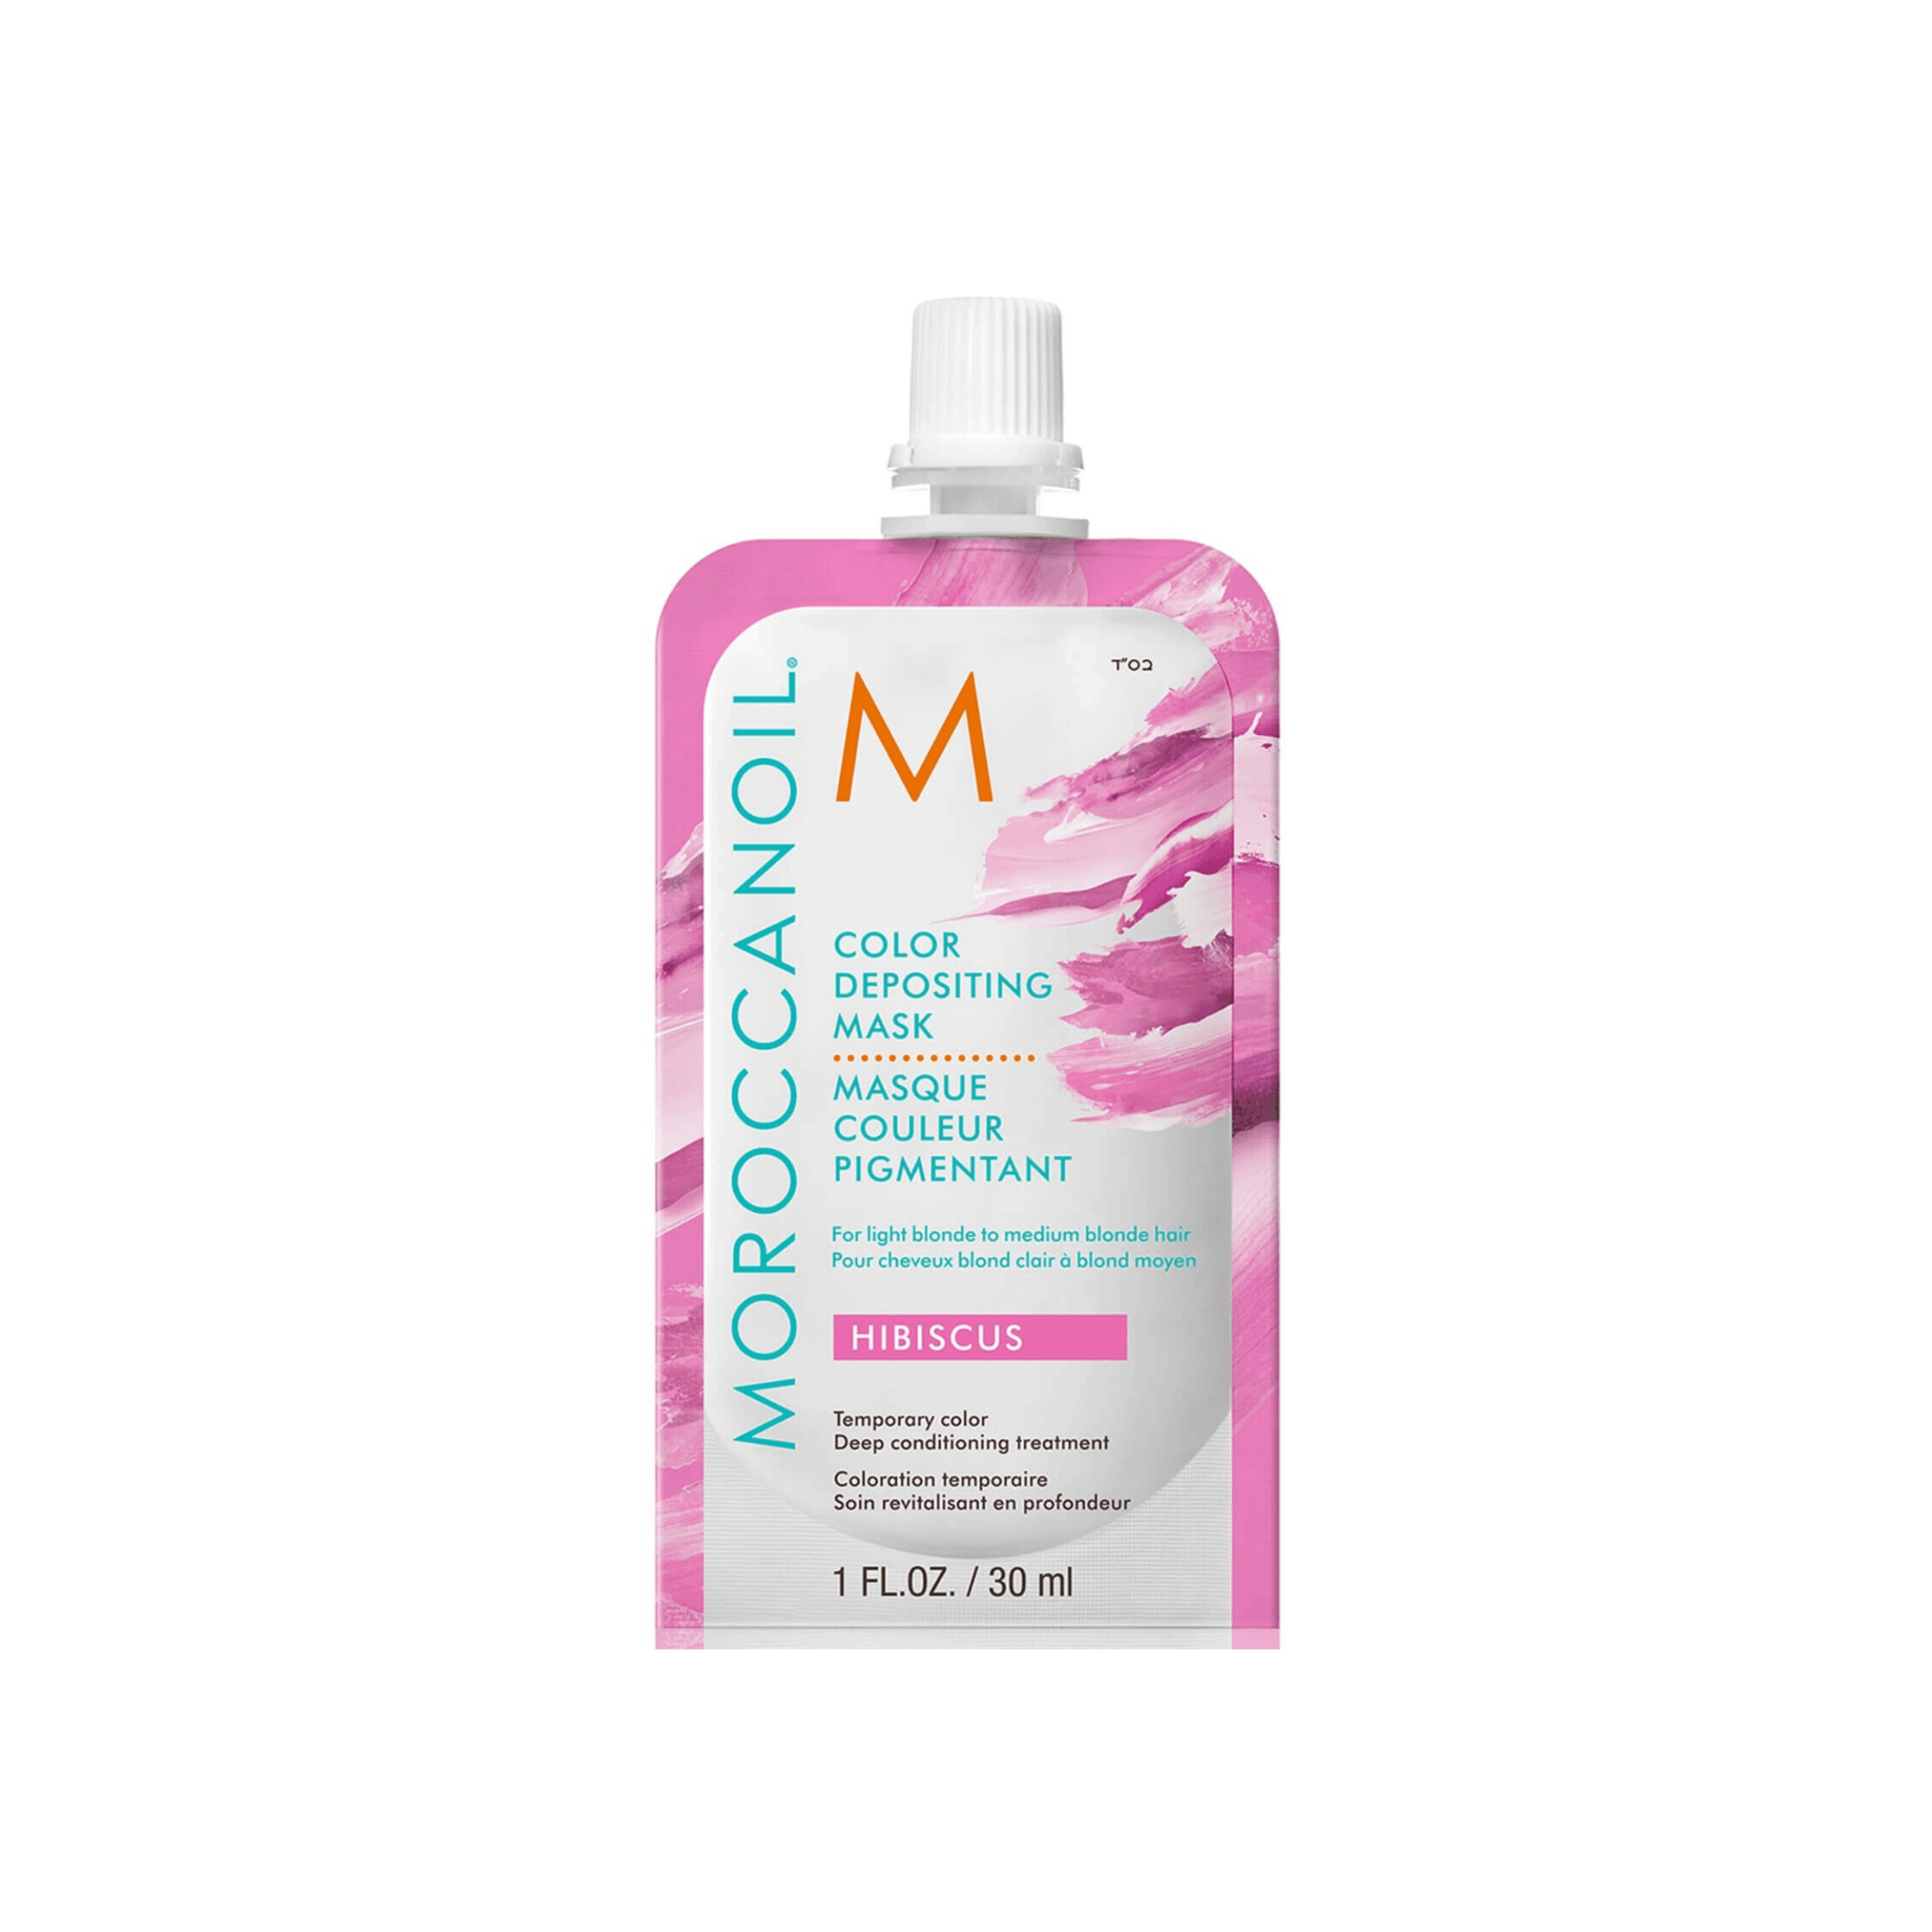 Moroccanoil. Masque Couleur Pigmentant Hibiscus - 30 ml - Concept C. Shop